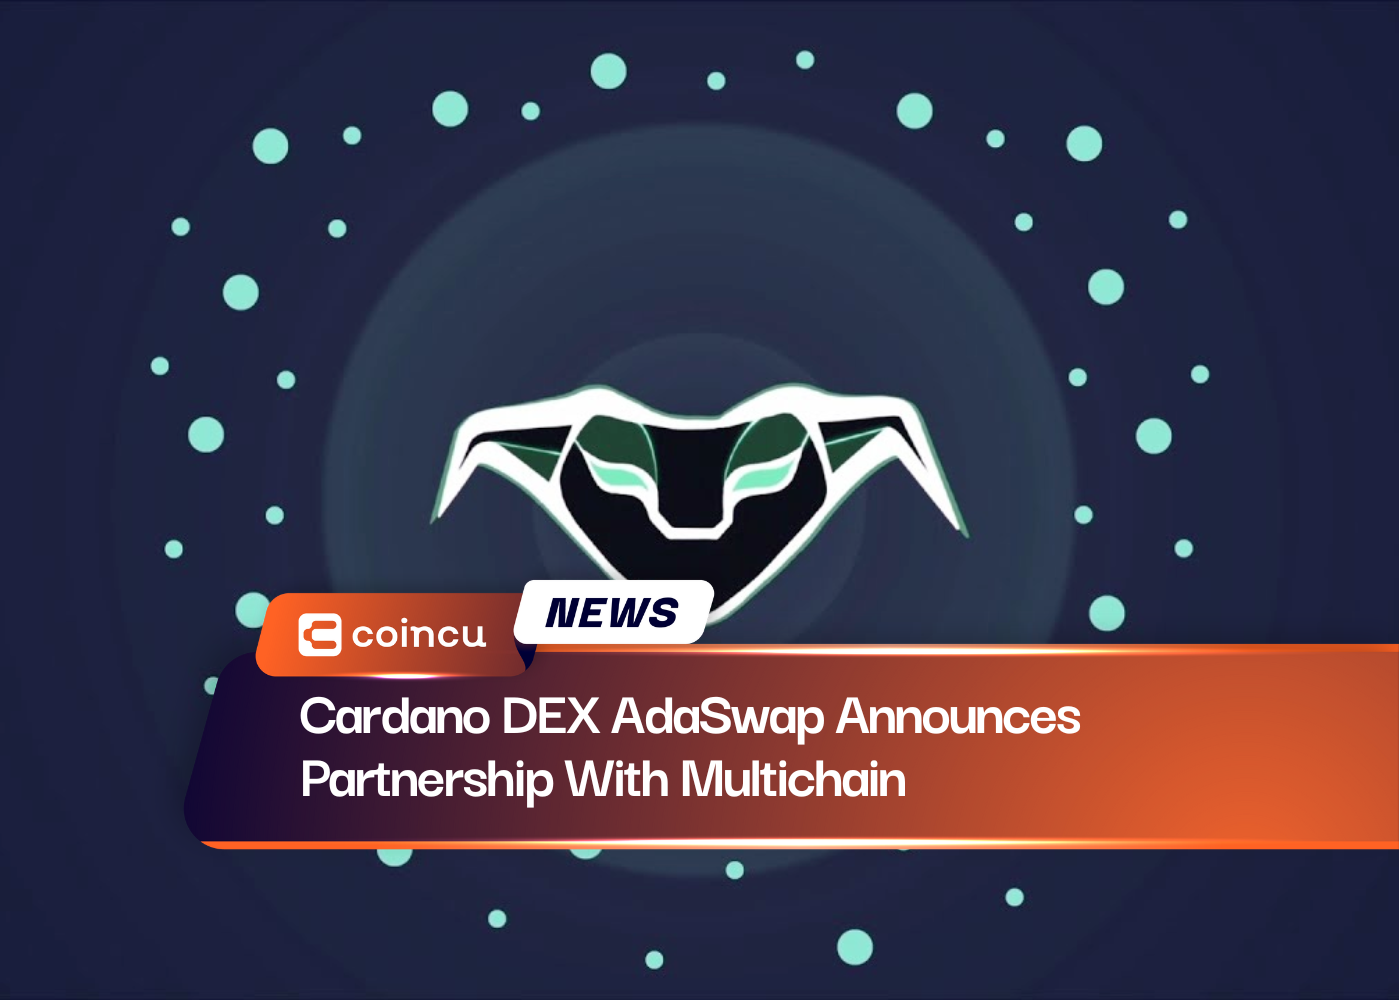 Cardano DEX AdaSwap Announces Partnership With Multichain